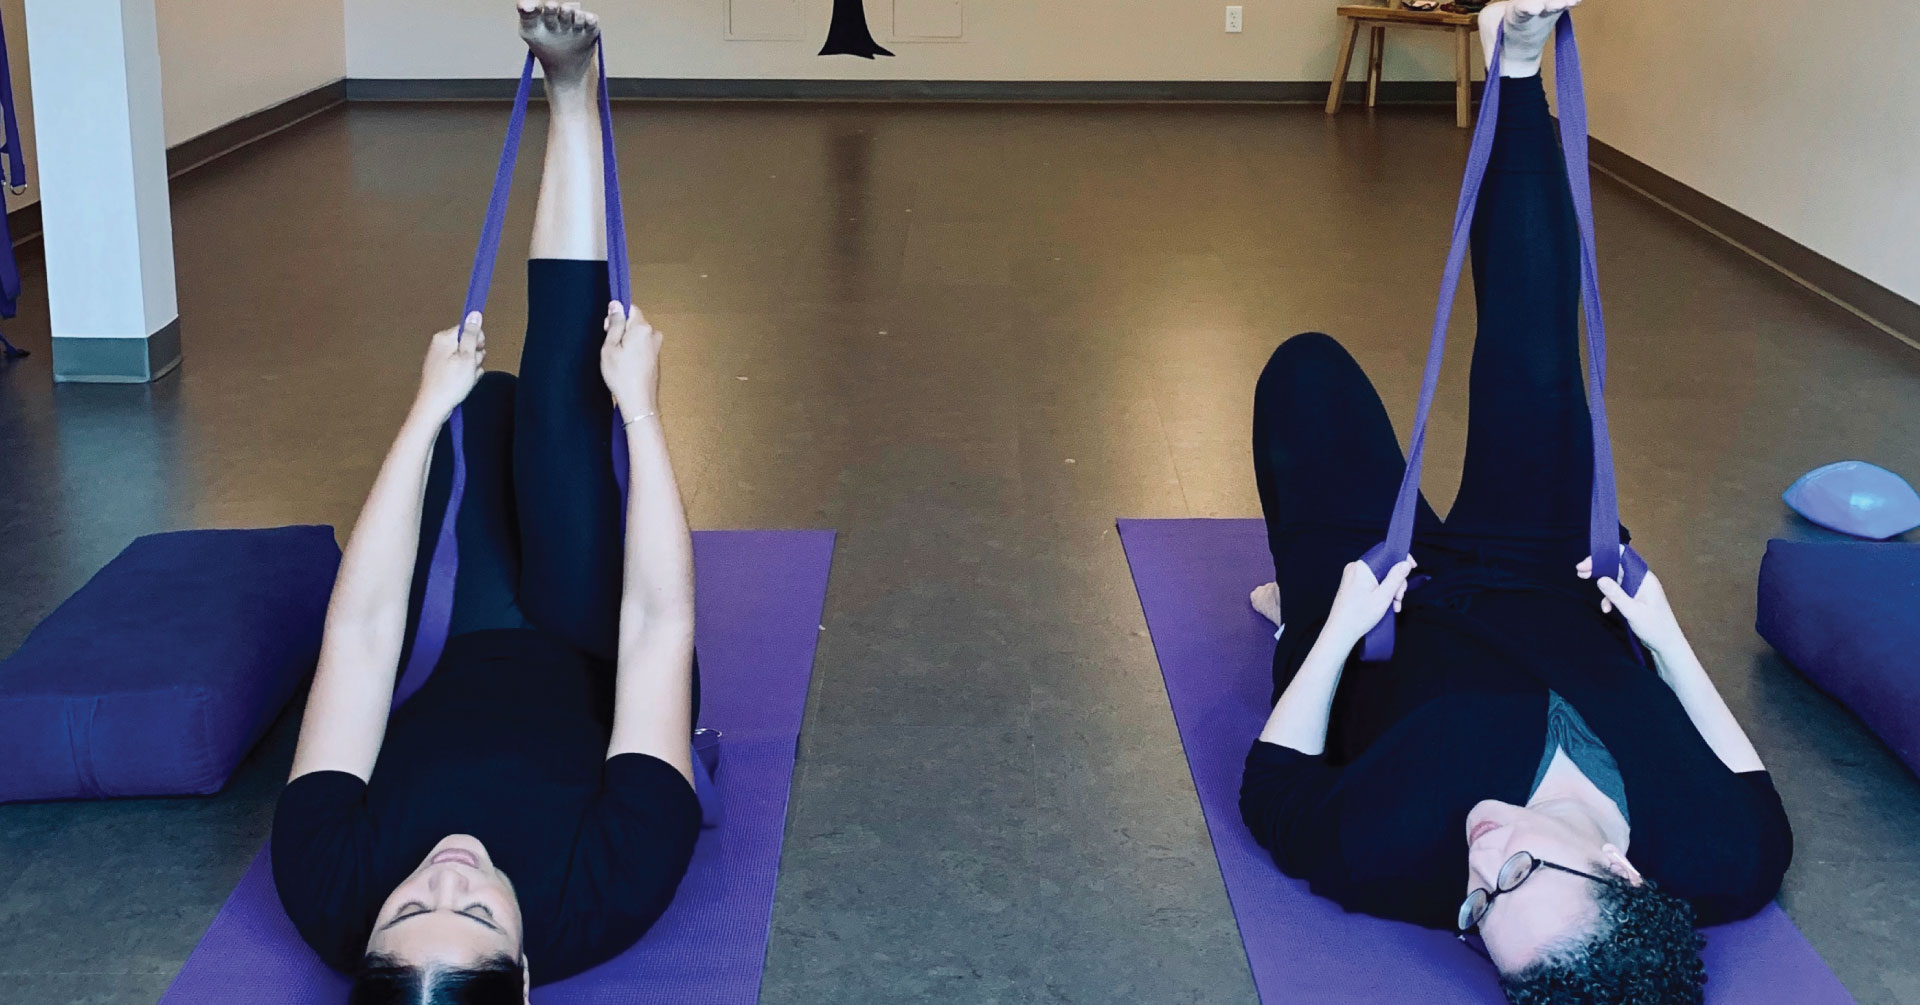 Womens essentials classes - Alcove Yoga